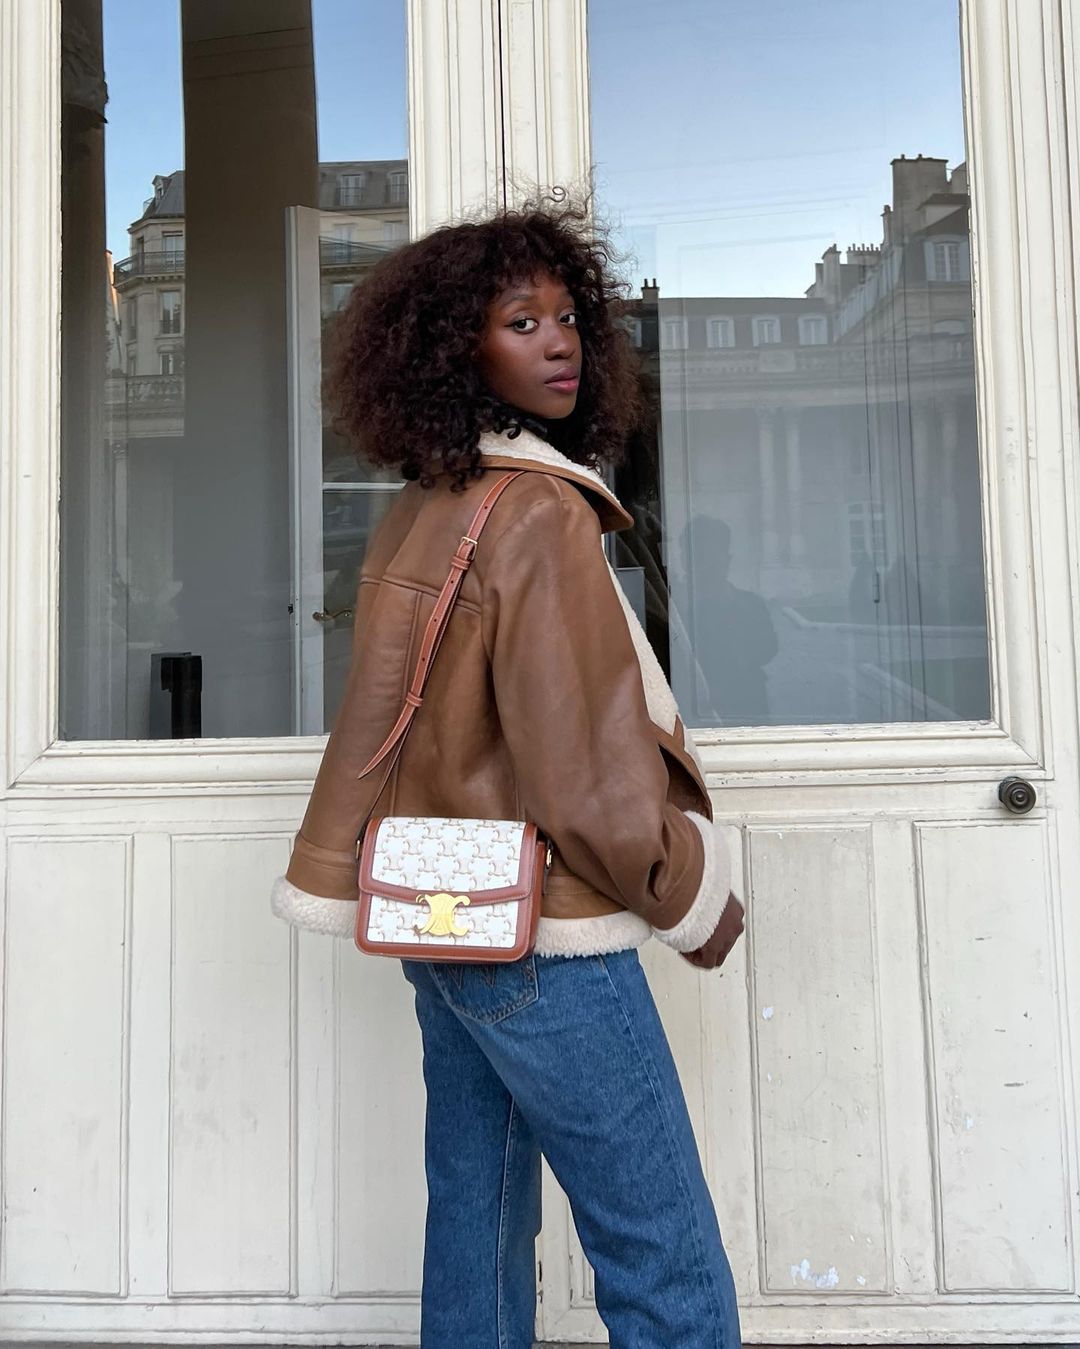 Women's Designer Bags & Purses - Luxury Handbags